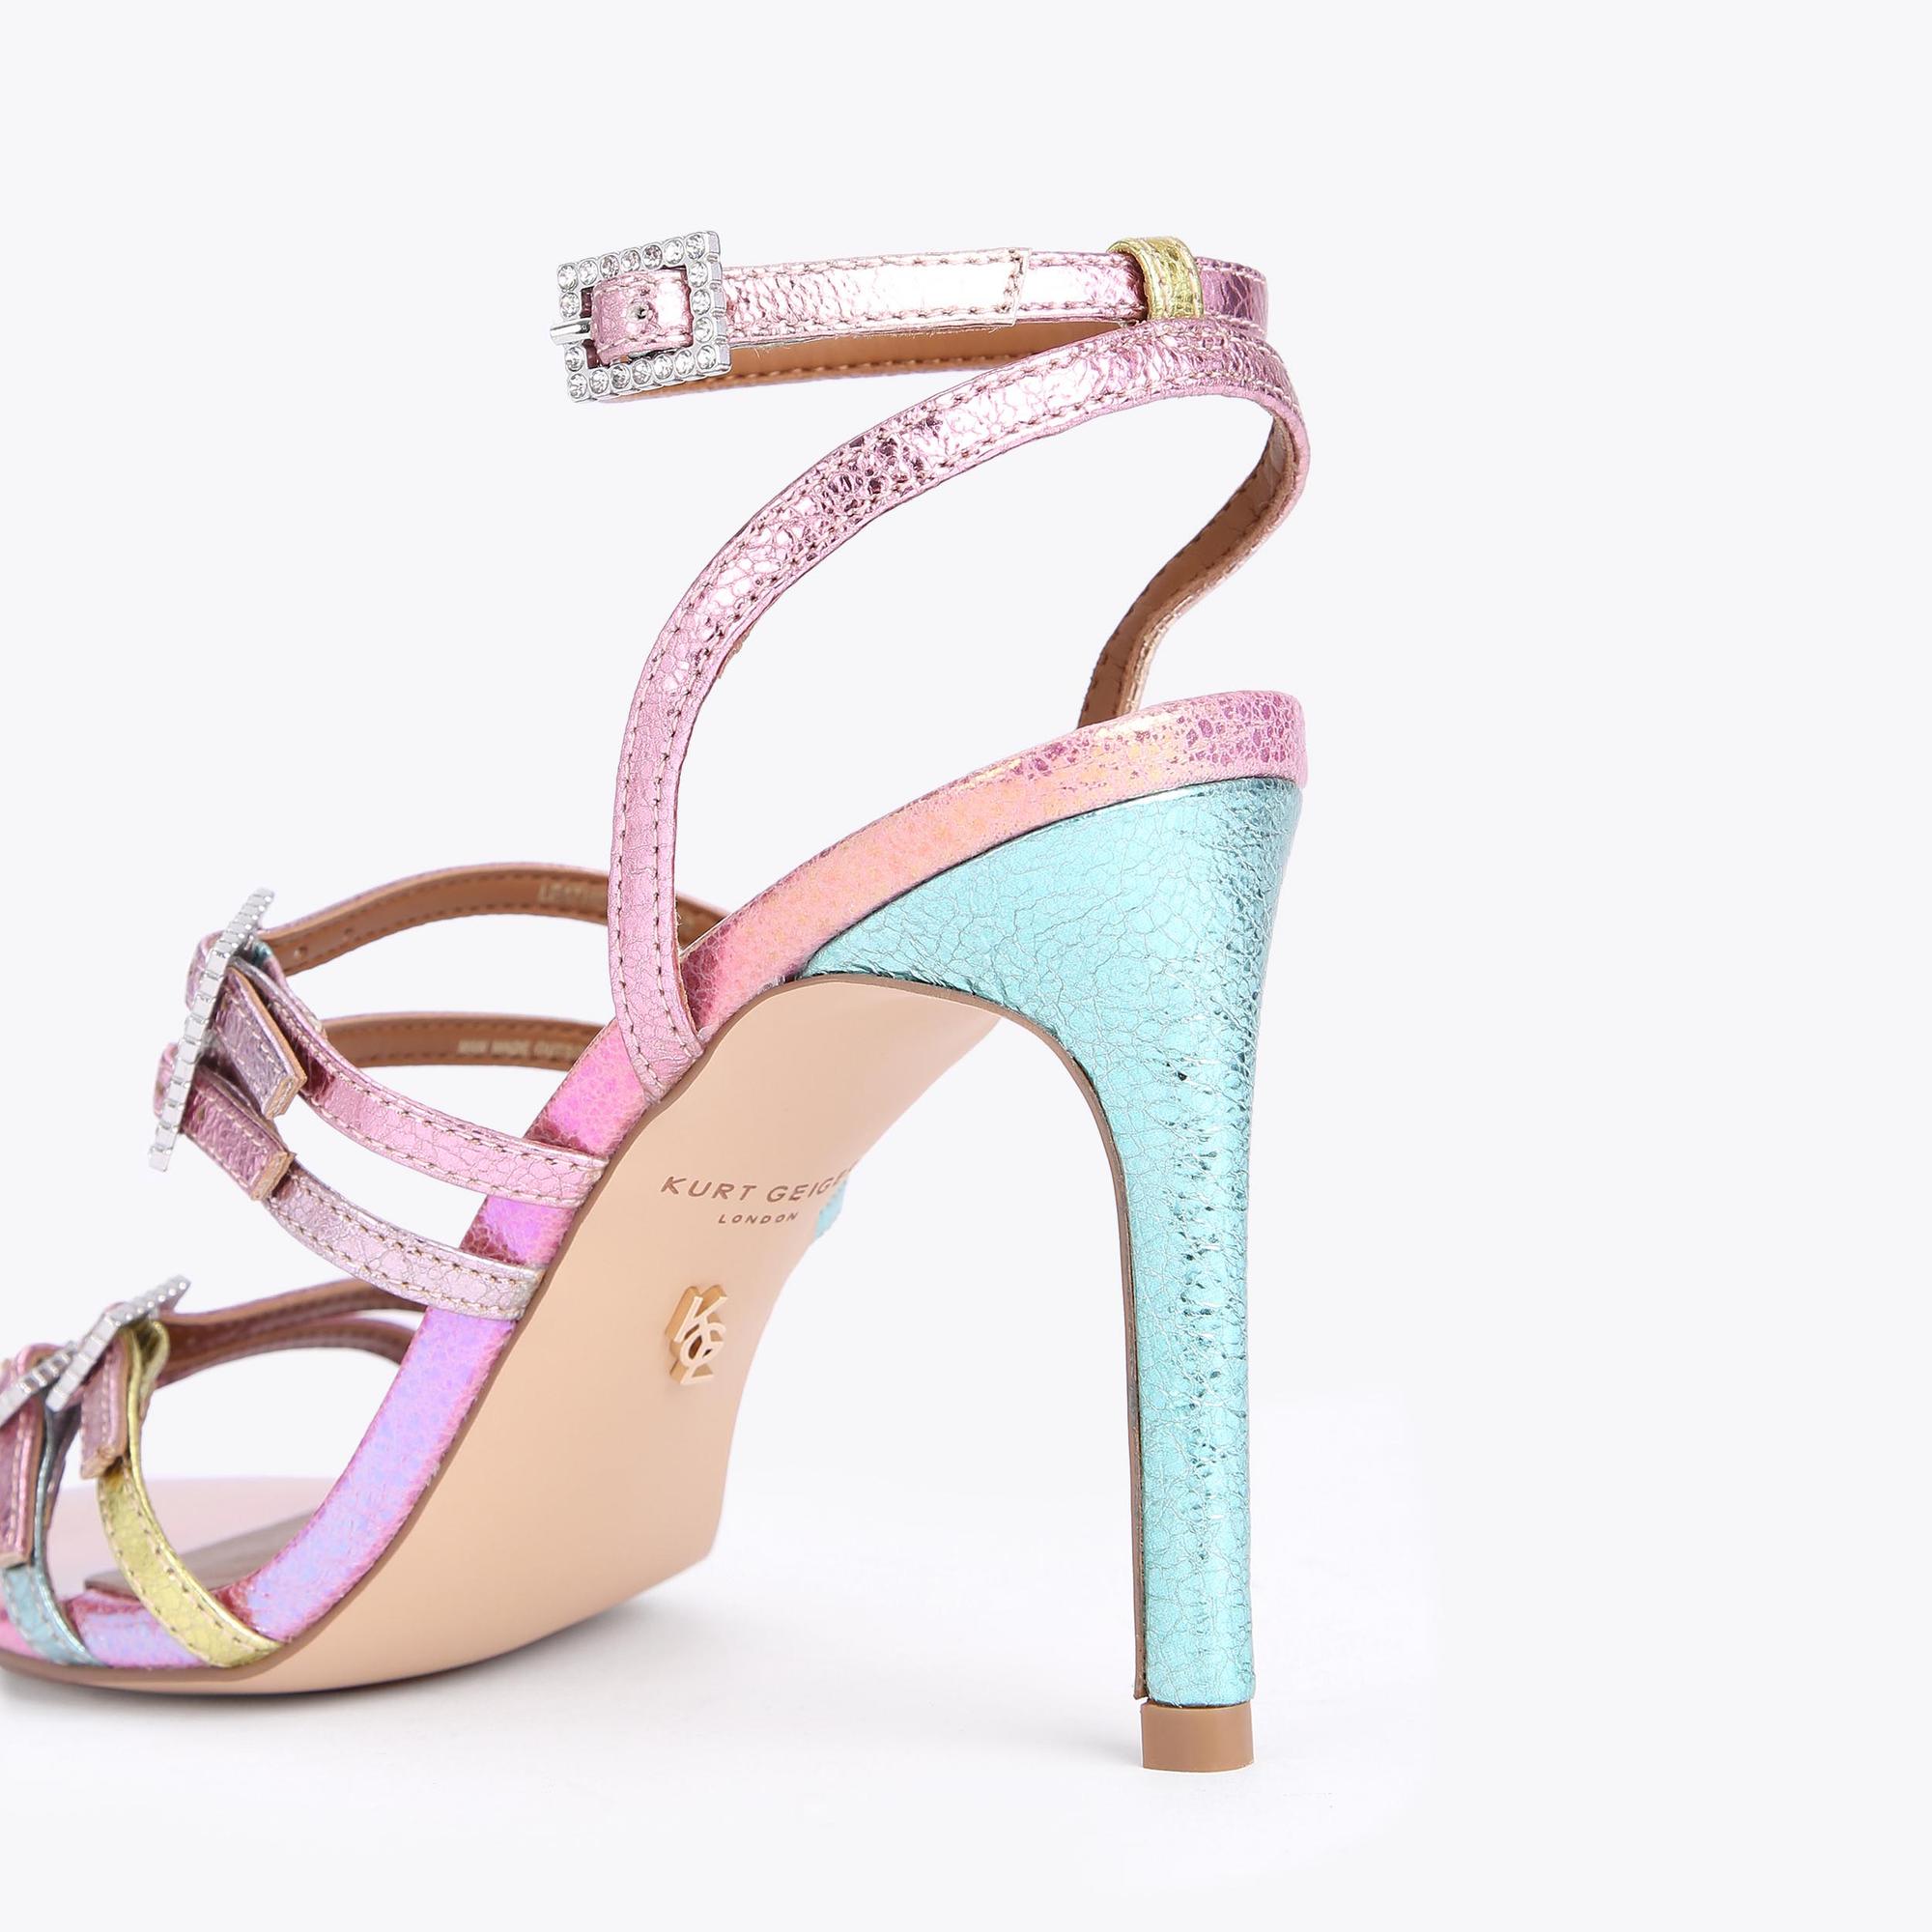 Kurt Geiger Bridge Crystal Sandals Shoes Wedding Heels BNIB 4.5 5.5 6 7 RRP £350 